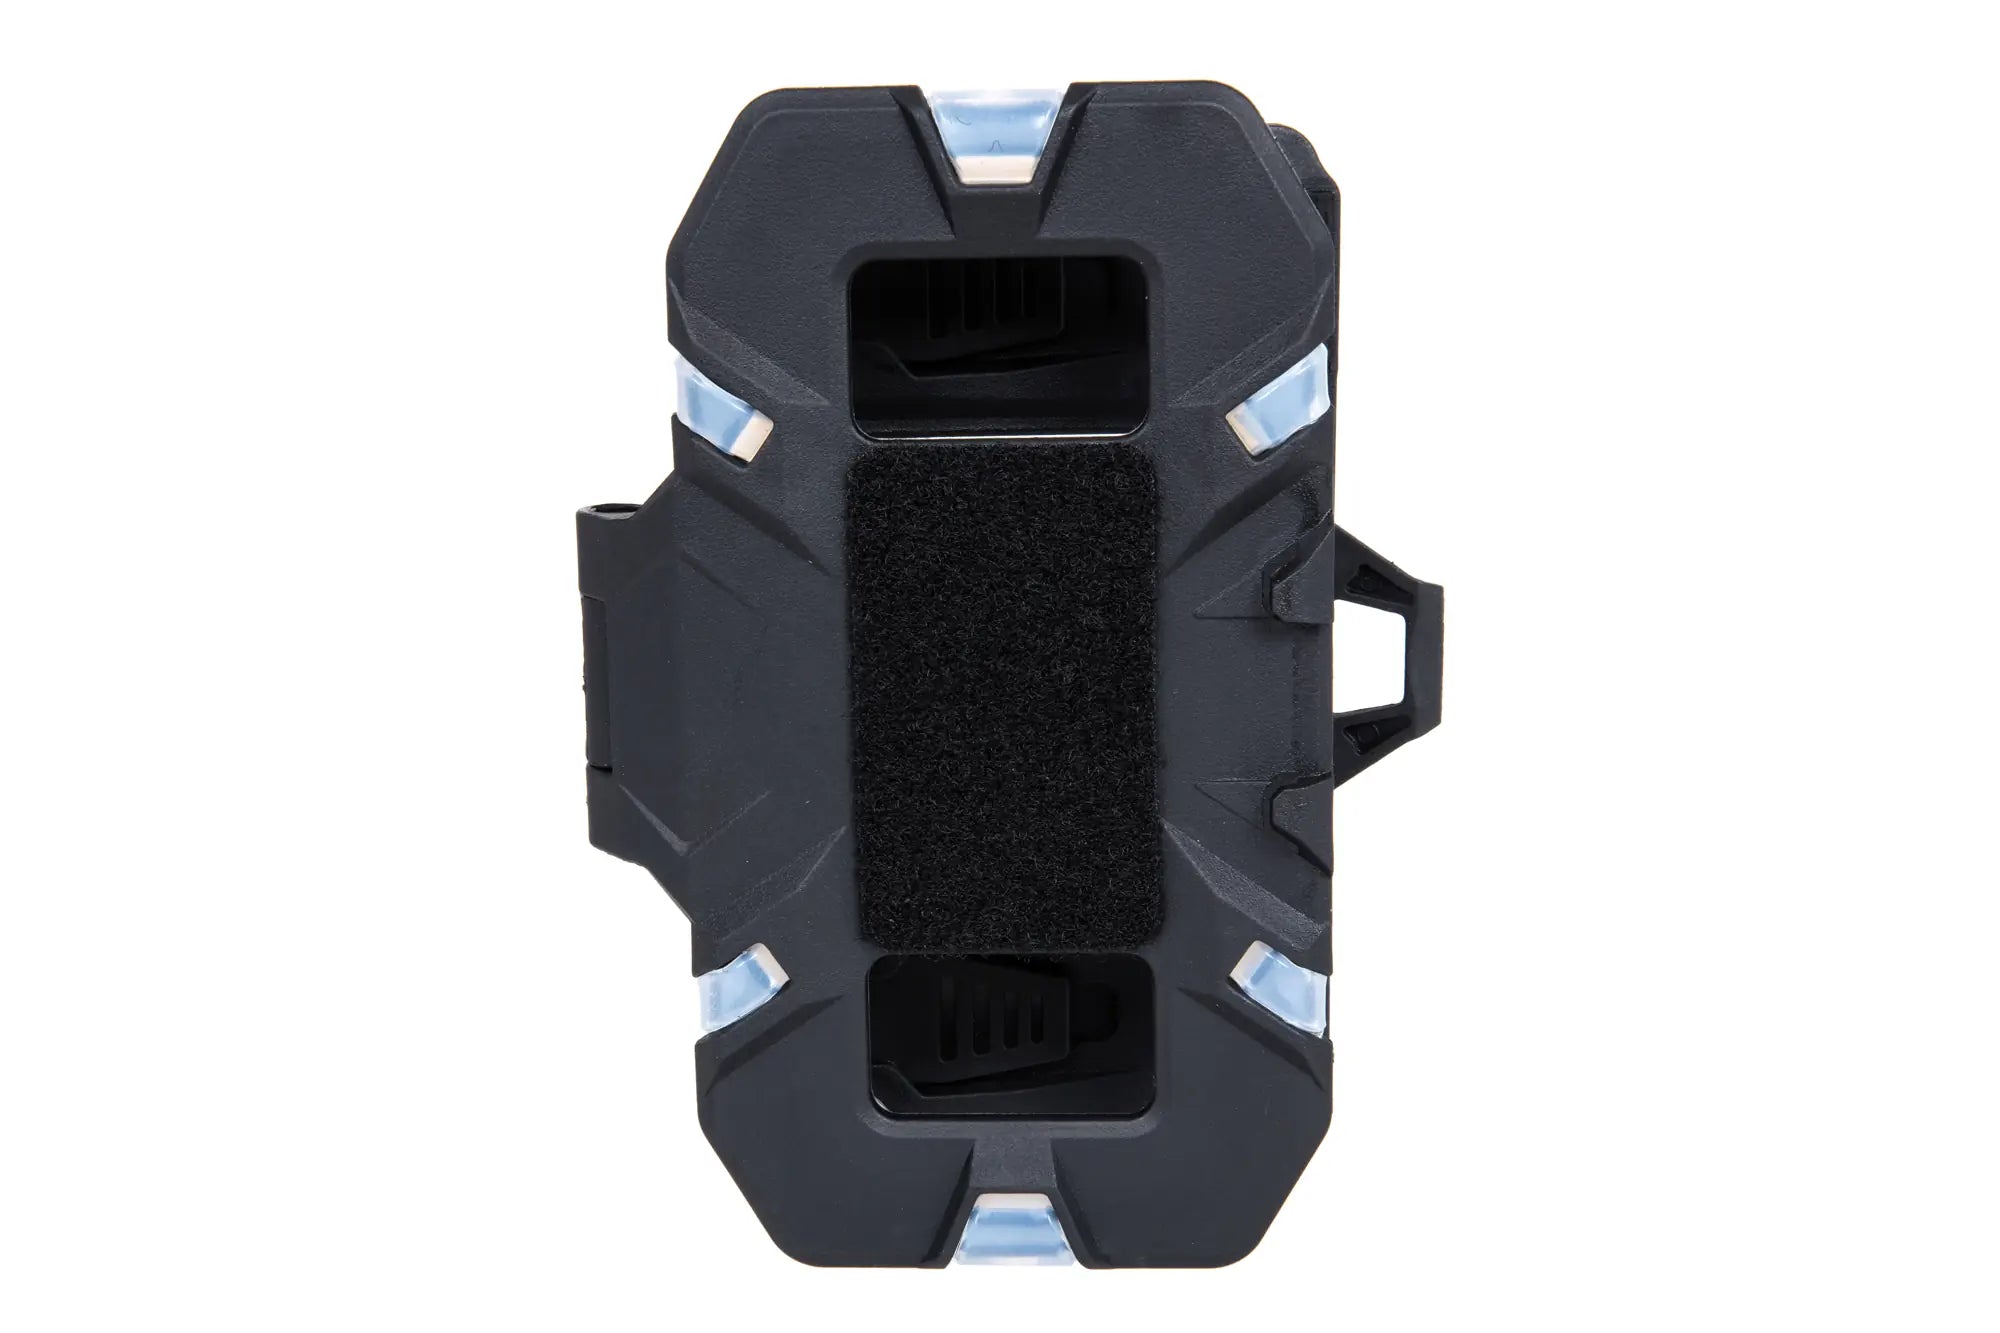 Primal Gear - tactical phone holder Black